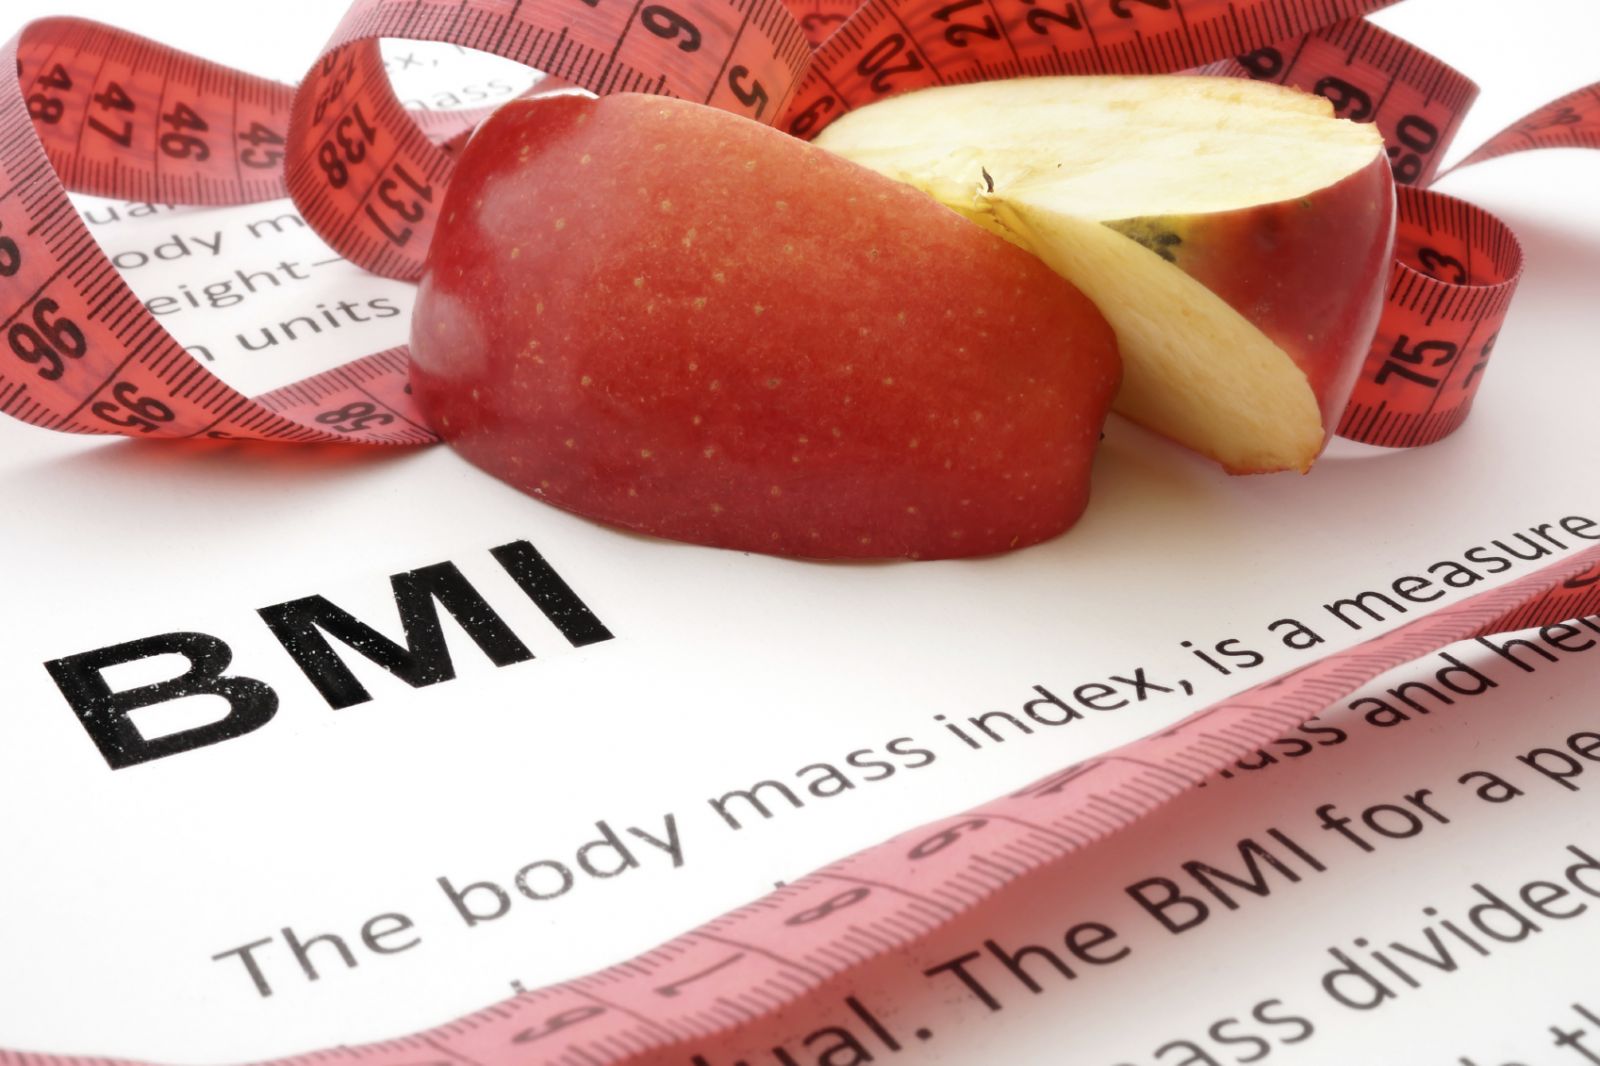 The body mass index (BMI)